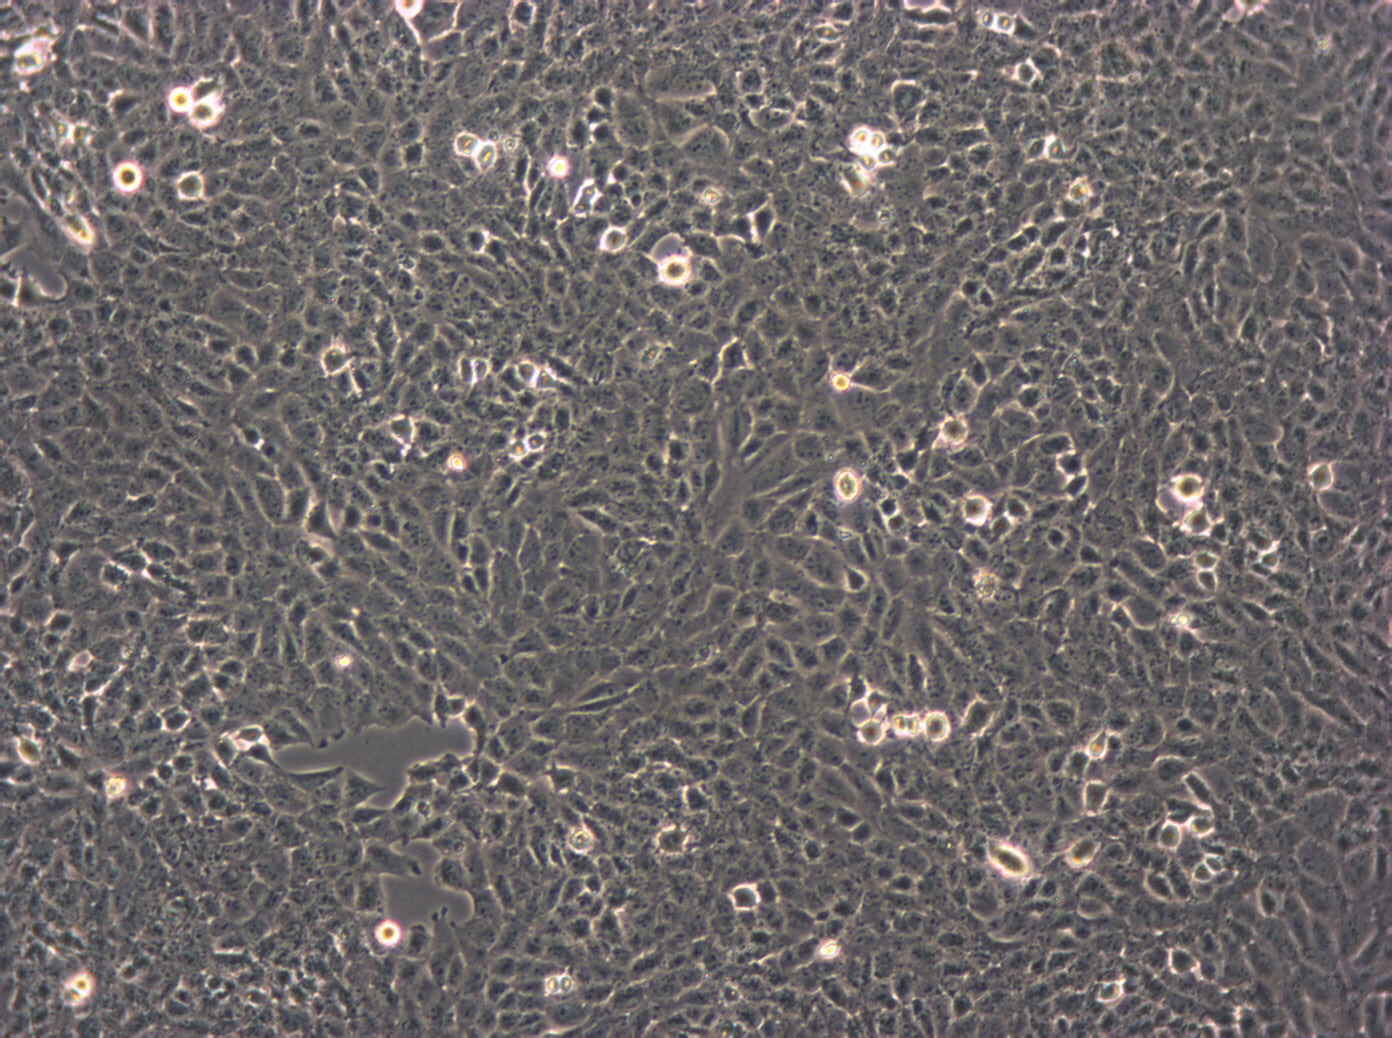 HCe-8693 Cell:人盲肠腺癌细胞系,HCe-8693 Cell